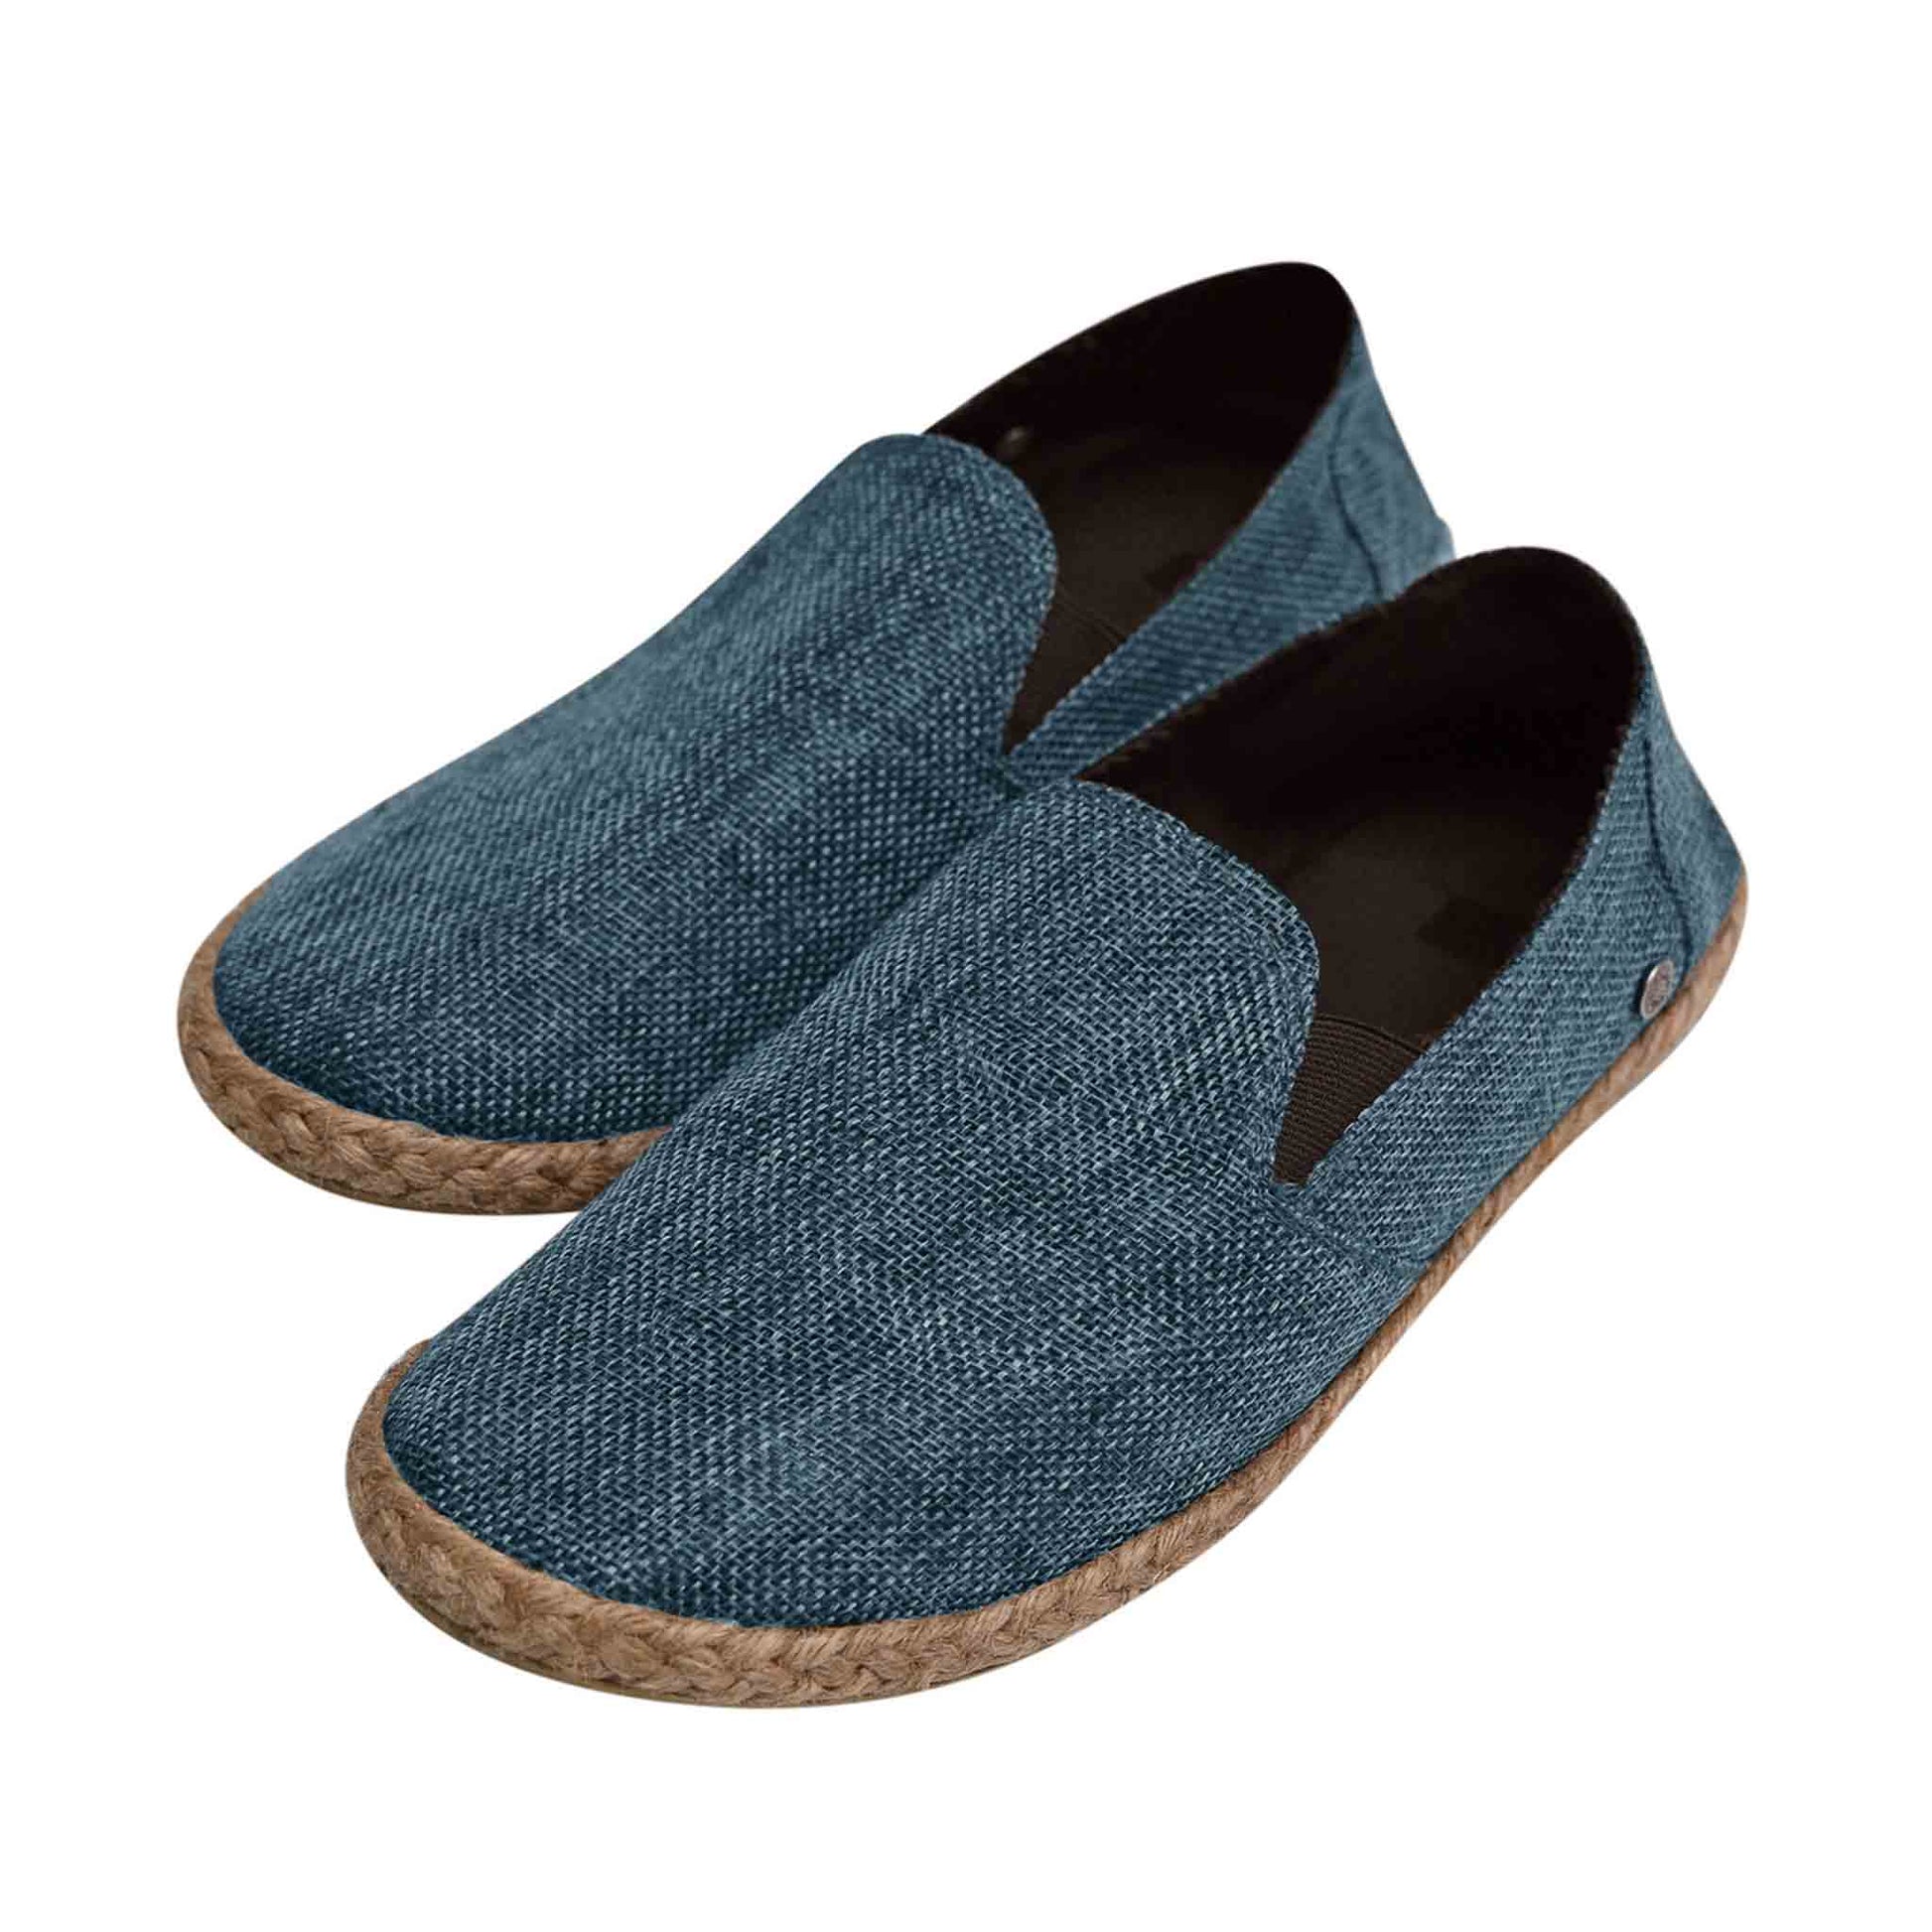 Hippie Jute Schuhe Leichtfüßig Blau